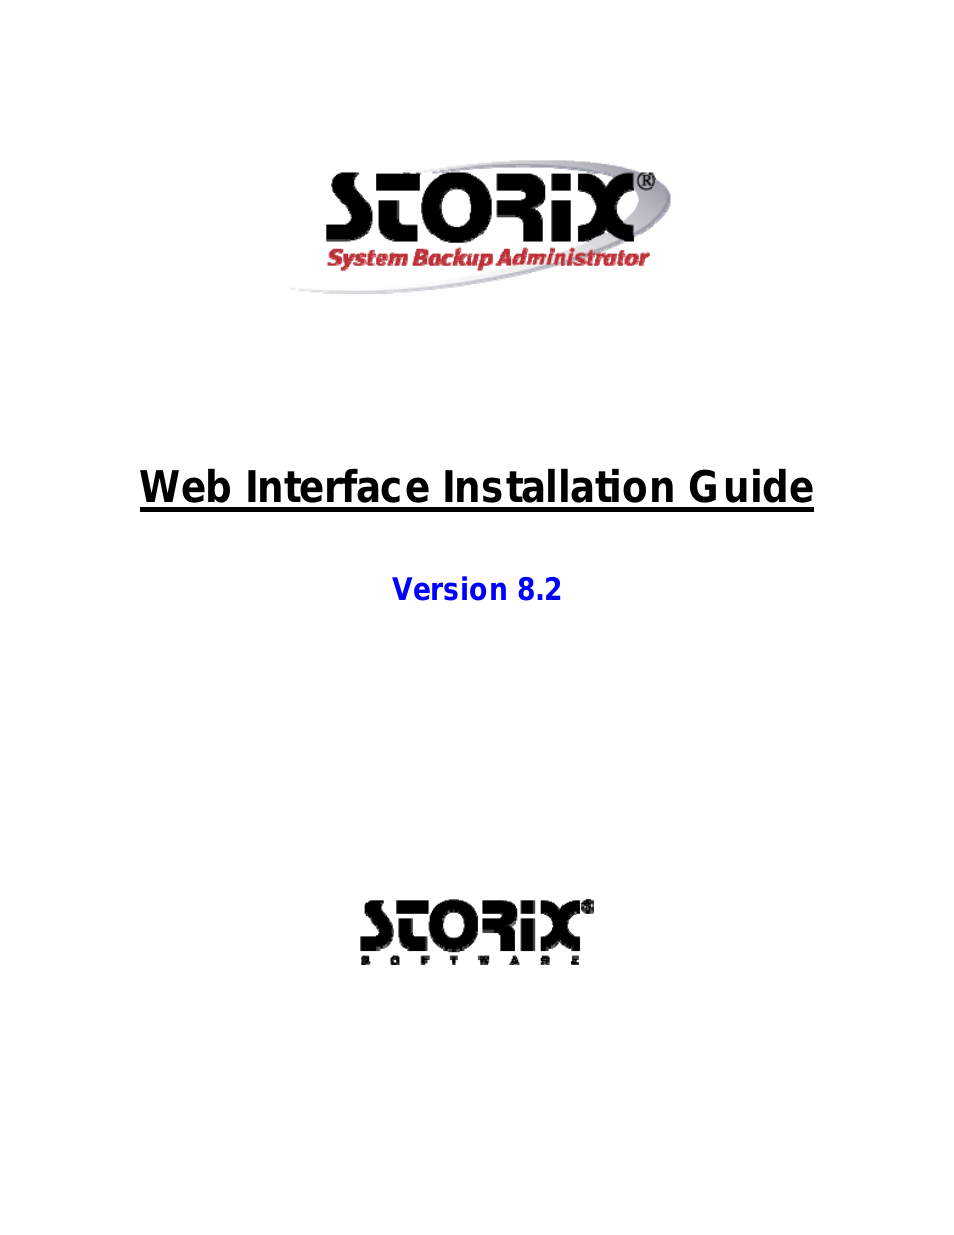 SBAdmin Web Interface Installation Guide